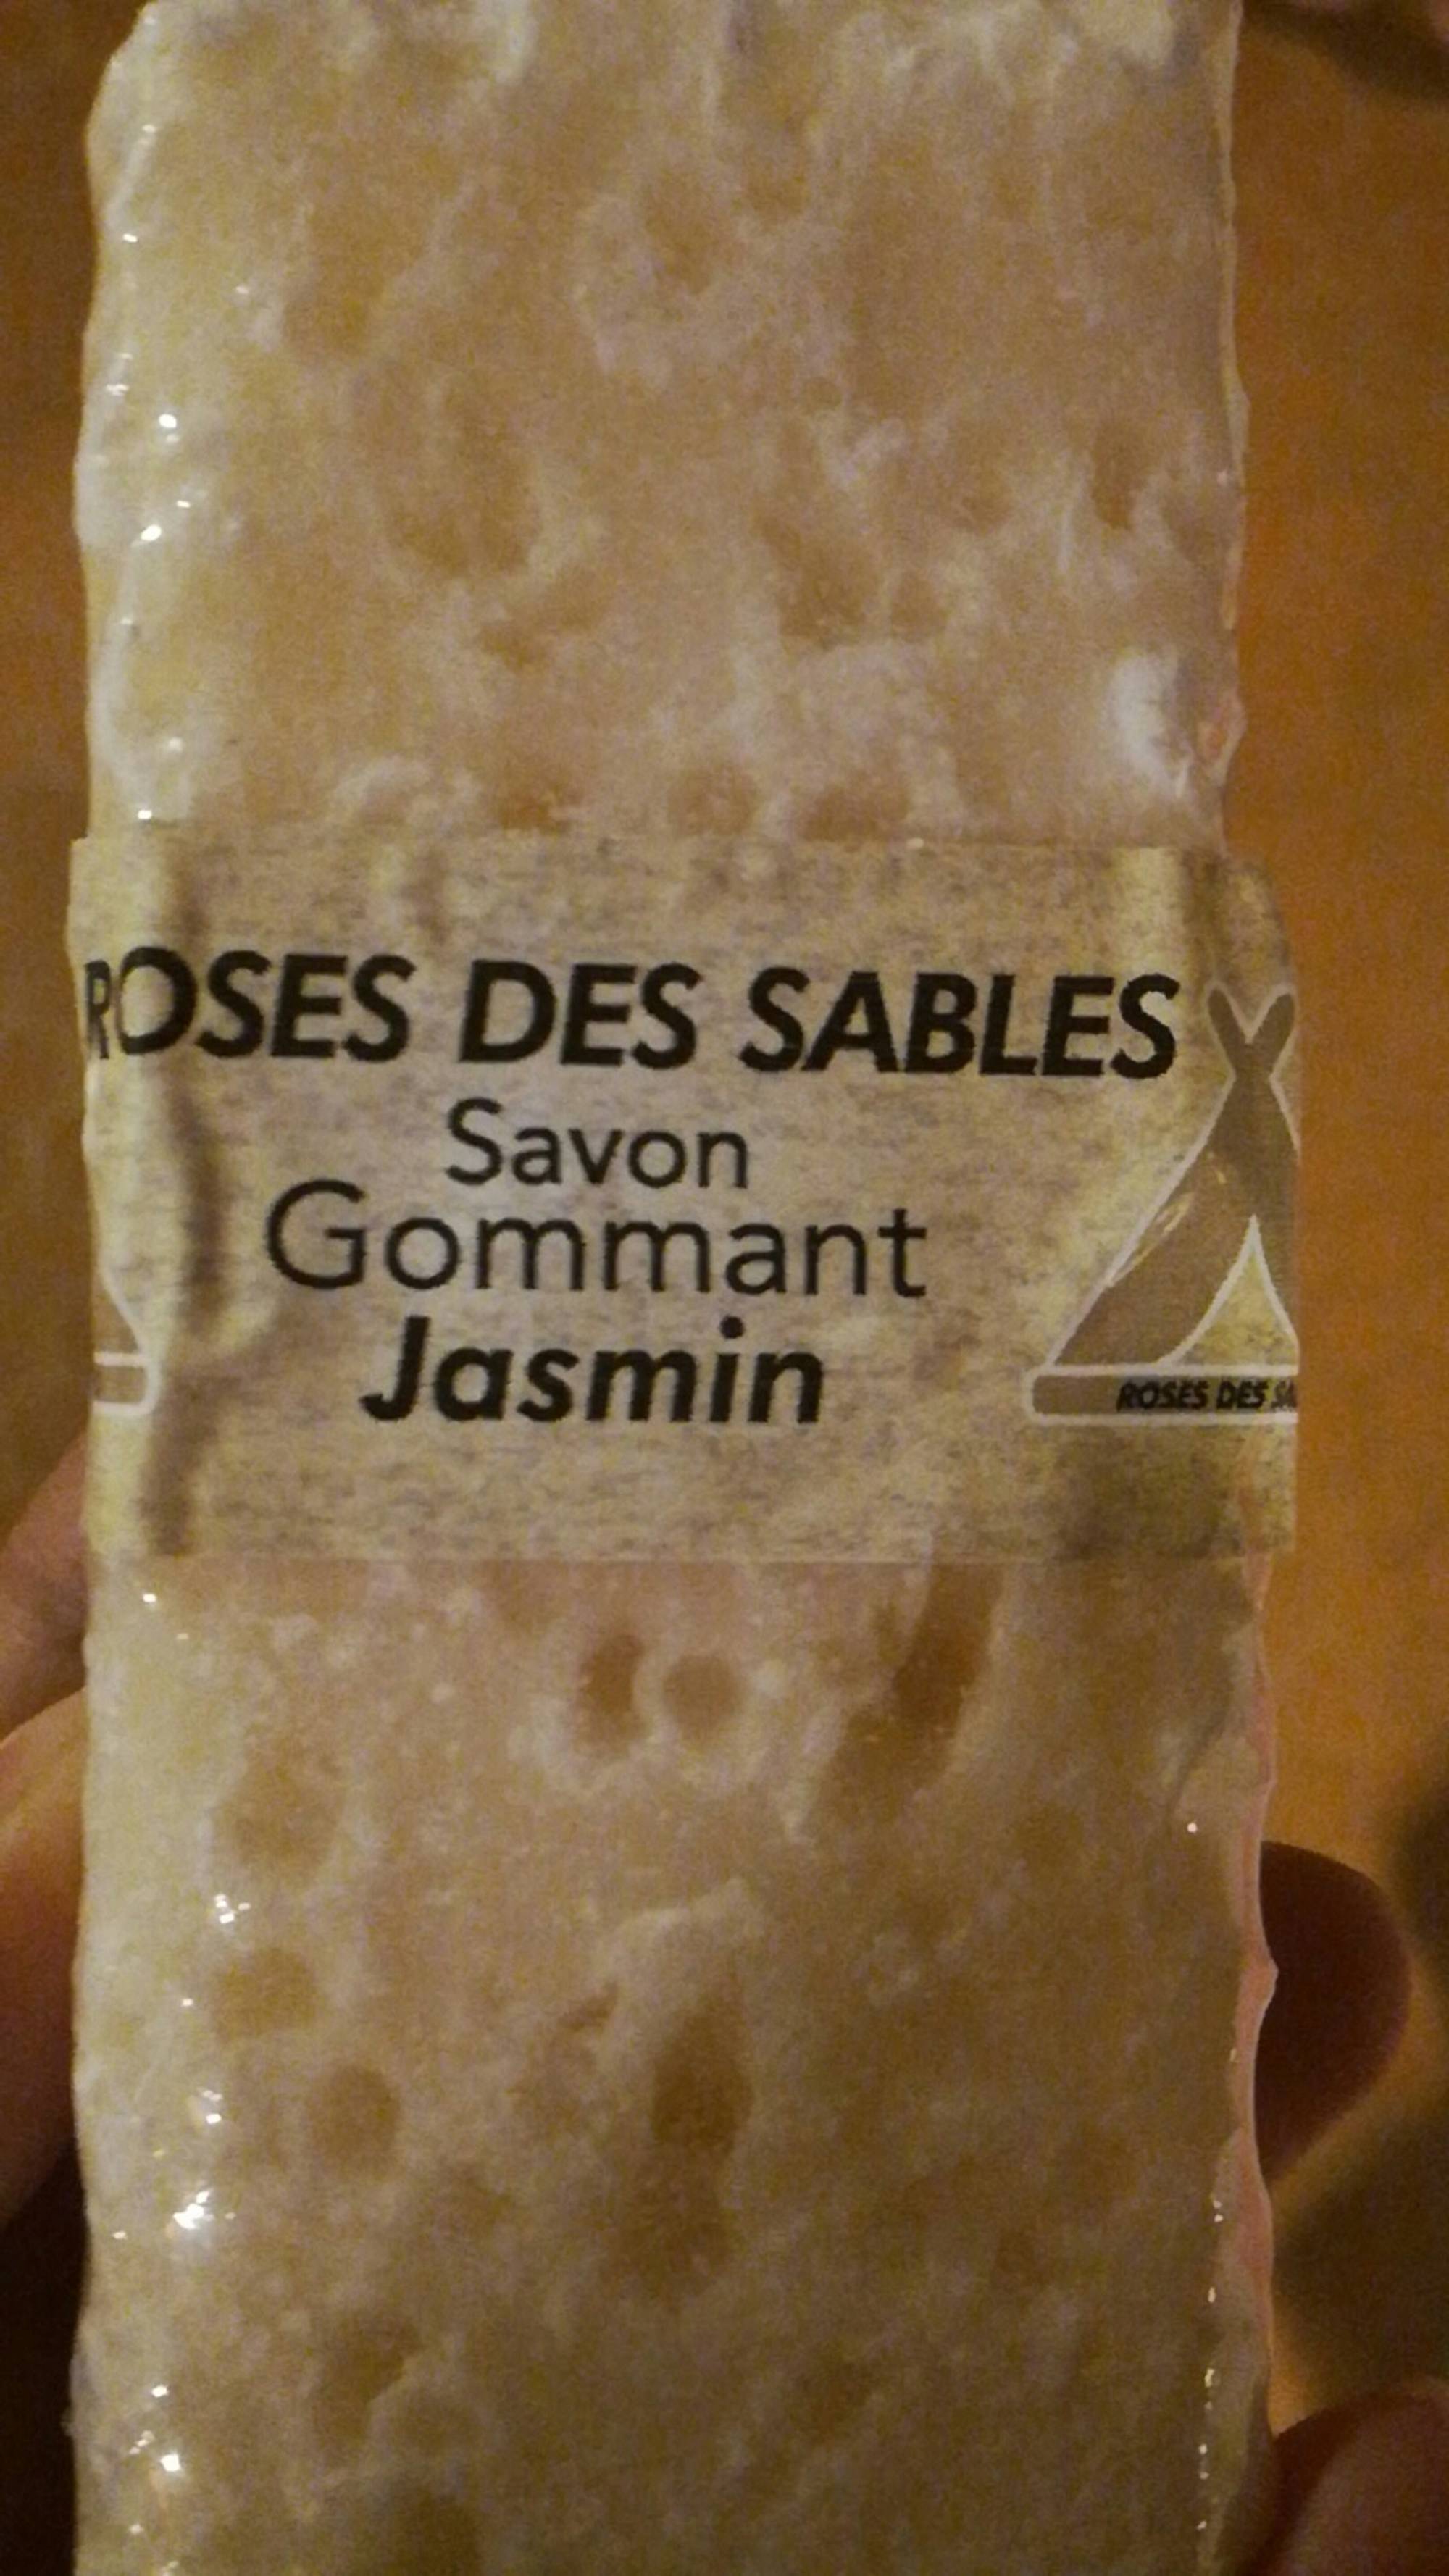 MOS ZERAFI - Roses des sables - Savon gommant Jasmin